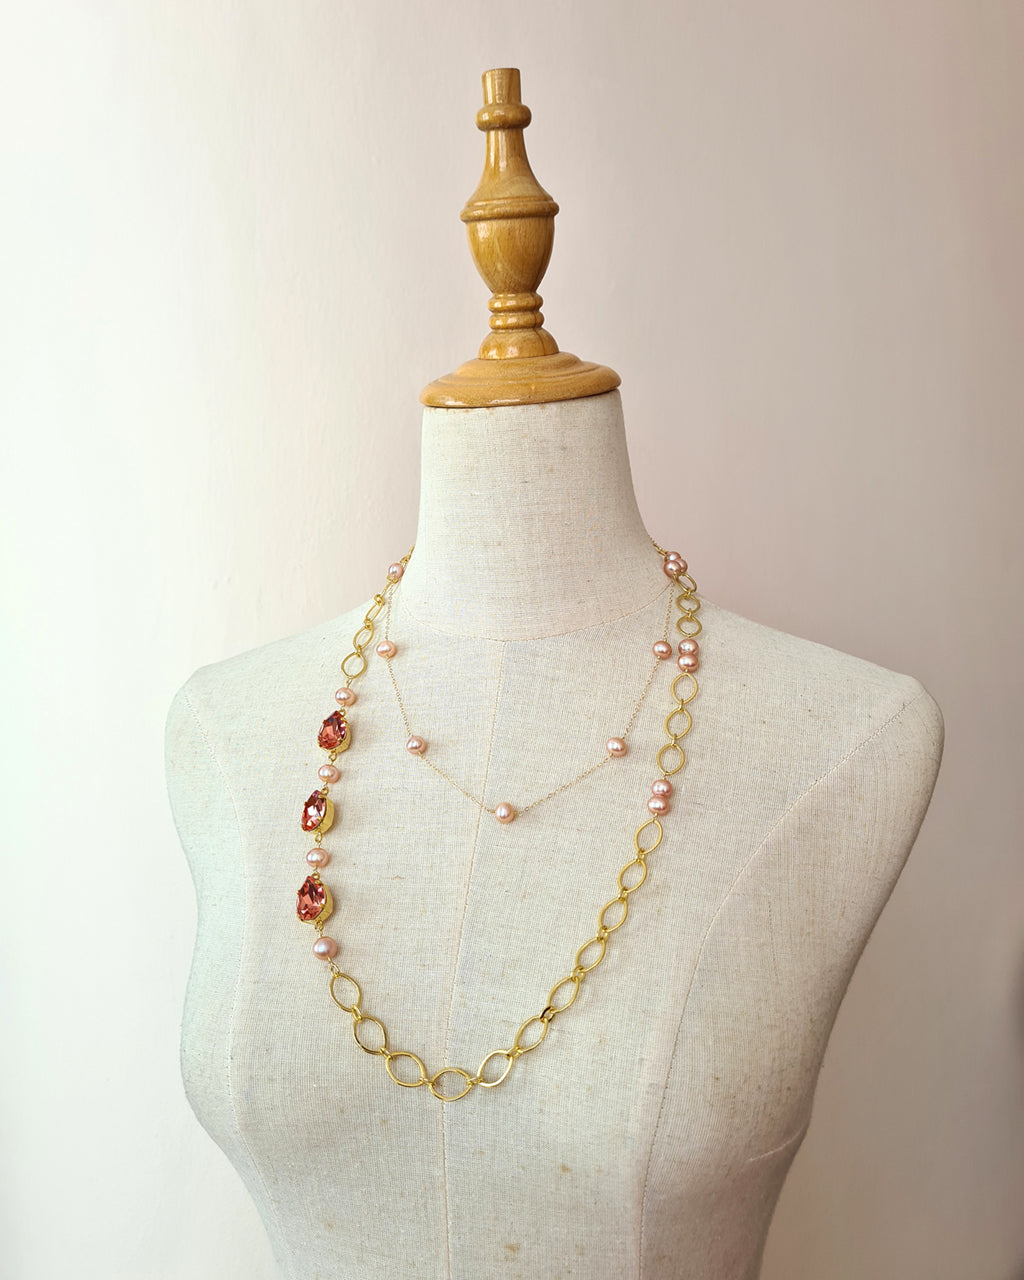 Clear Quartz Bottle Necklace with Pearls - Aviva Stanoff Design